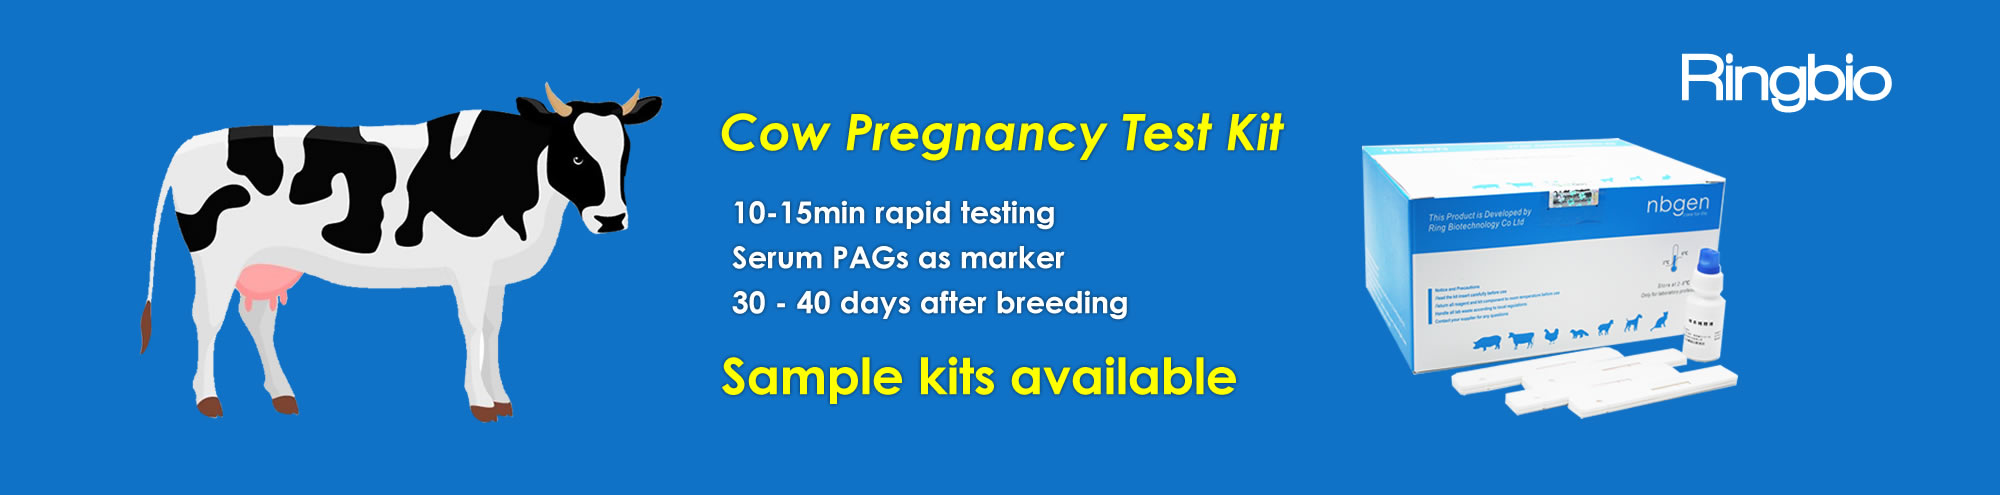 Bovine pregnancy rapid test kit calls for evluation